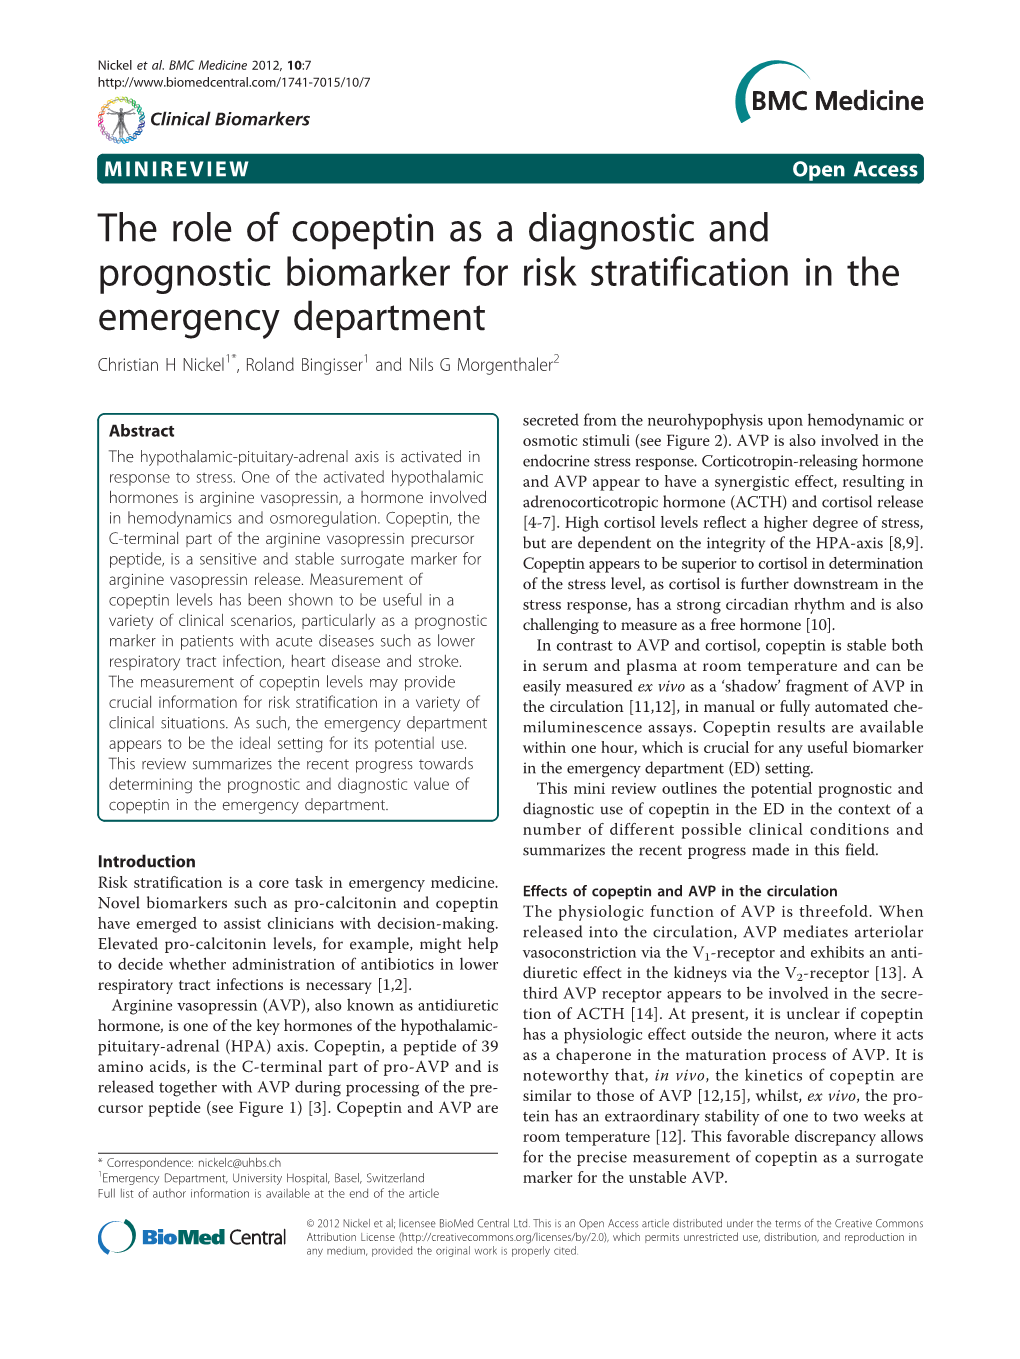 The Role of Copeptin As a Diagnostic and Prognostic Biomarker for Risk